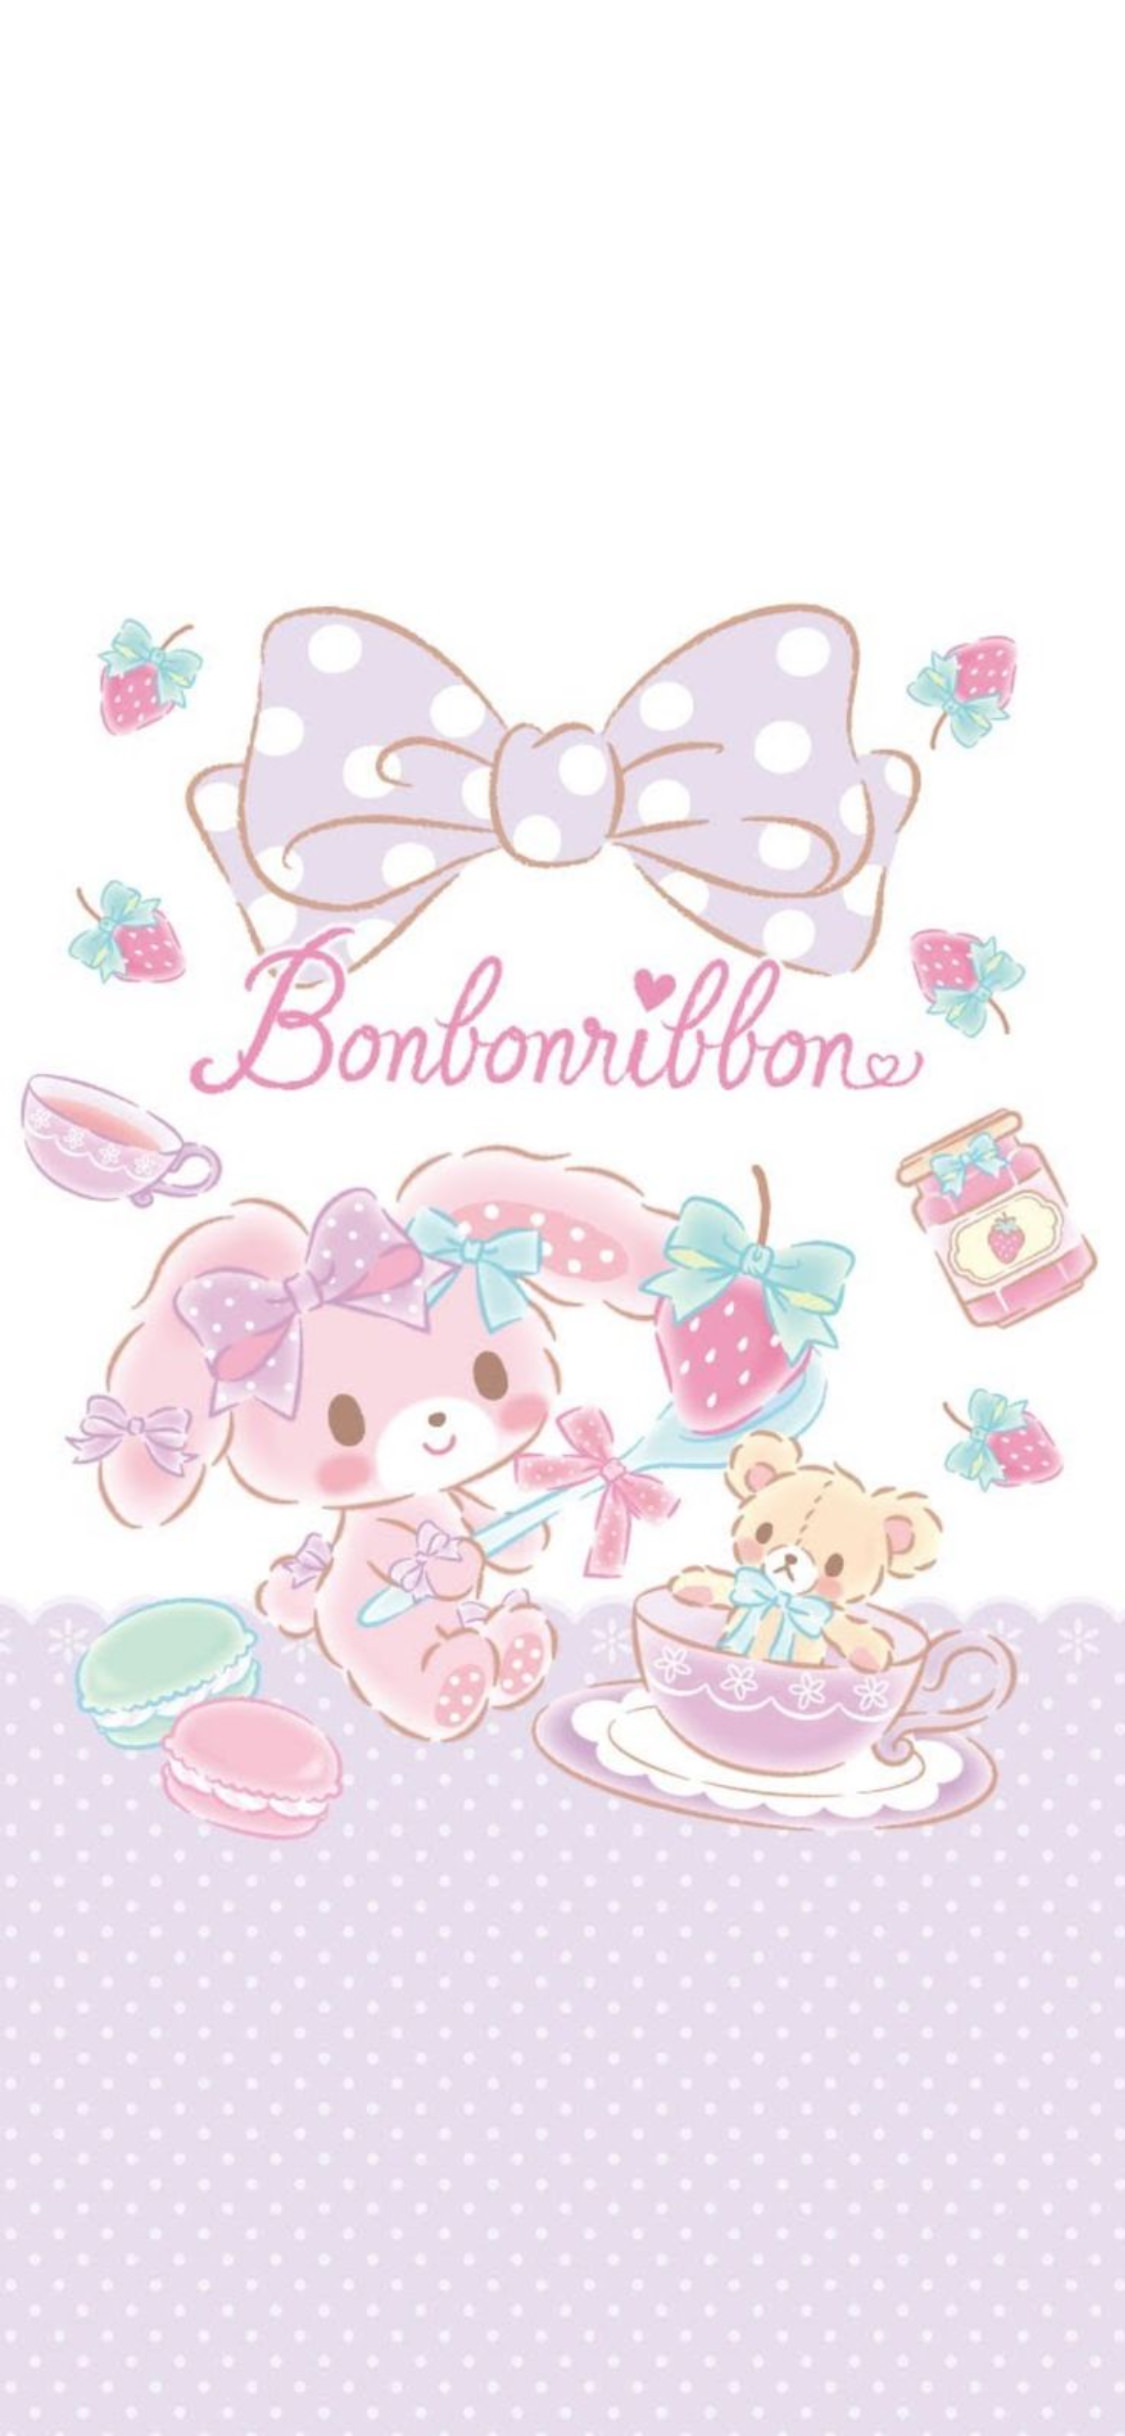 bonbonribbon02 - ぼんぼんりぼんの無料高画質スマホ壁紙14枚 [iPhone＆Androidに対応]